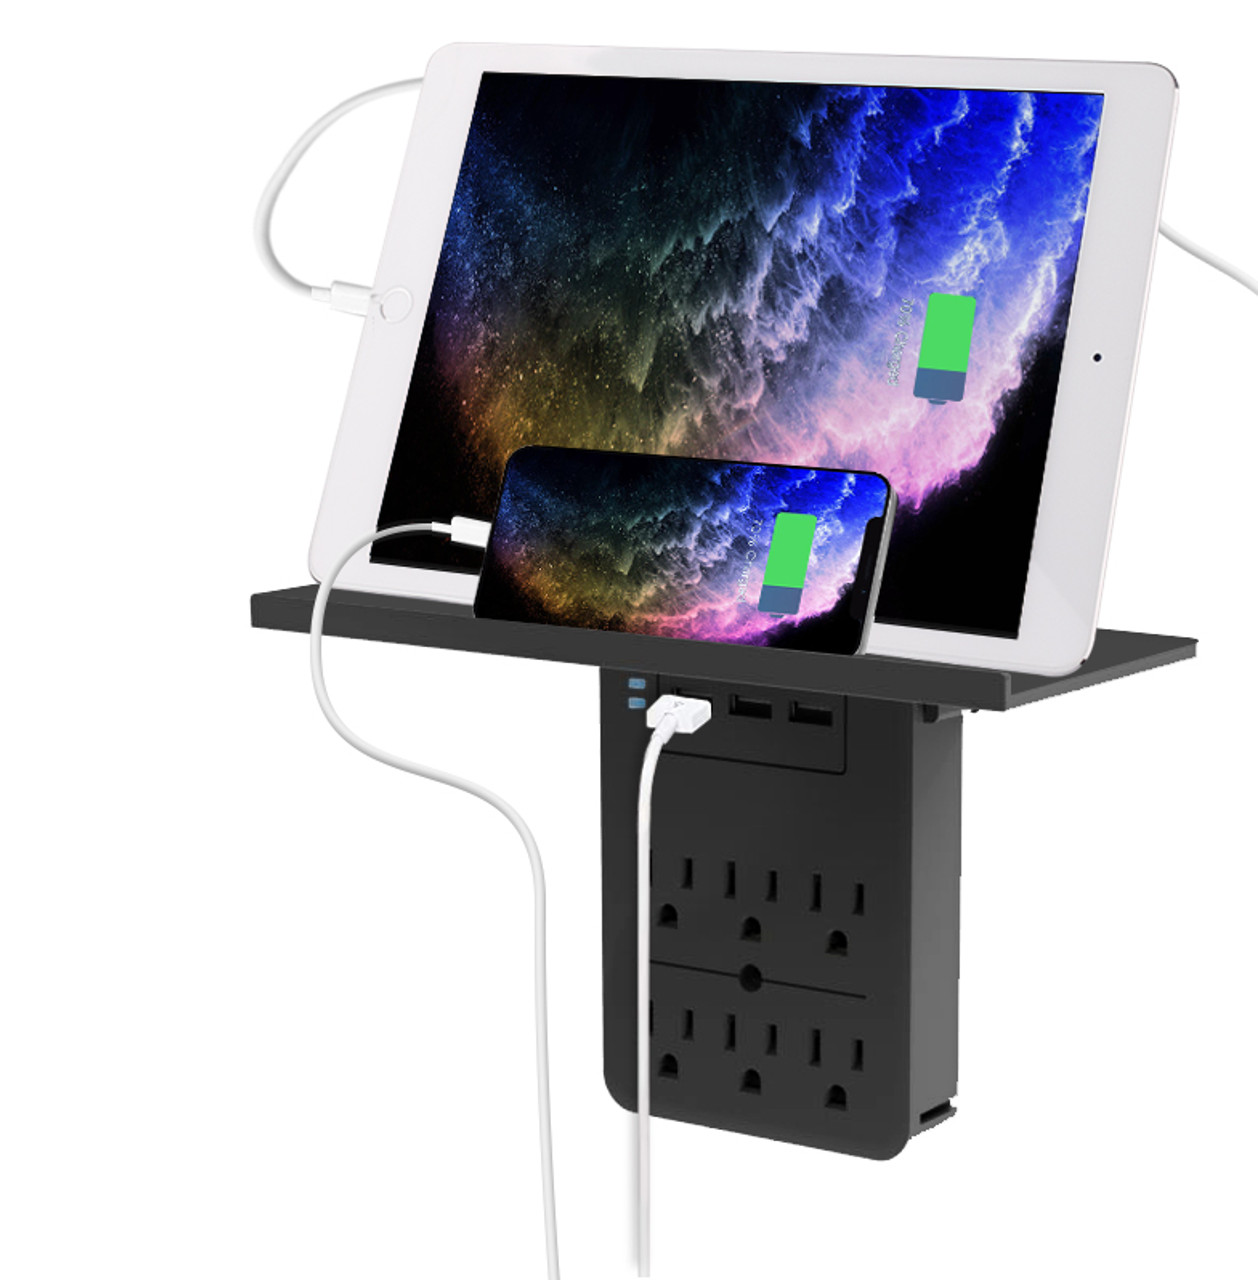 Aduro Surge Shelf 6 Outlet 3 USB Port Charging Station Surge Protector product image